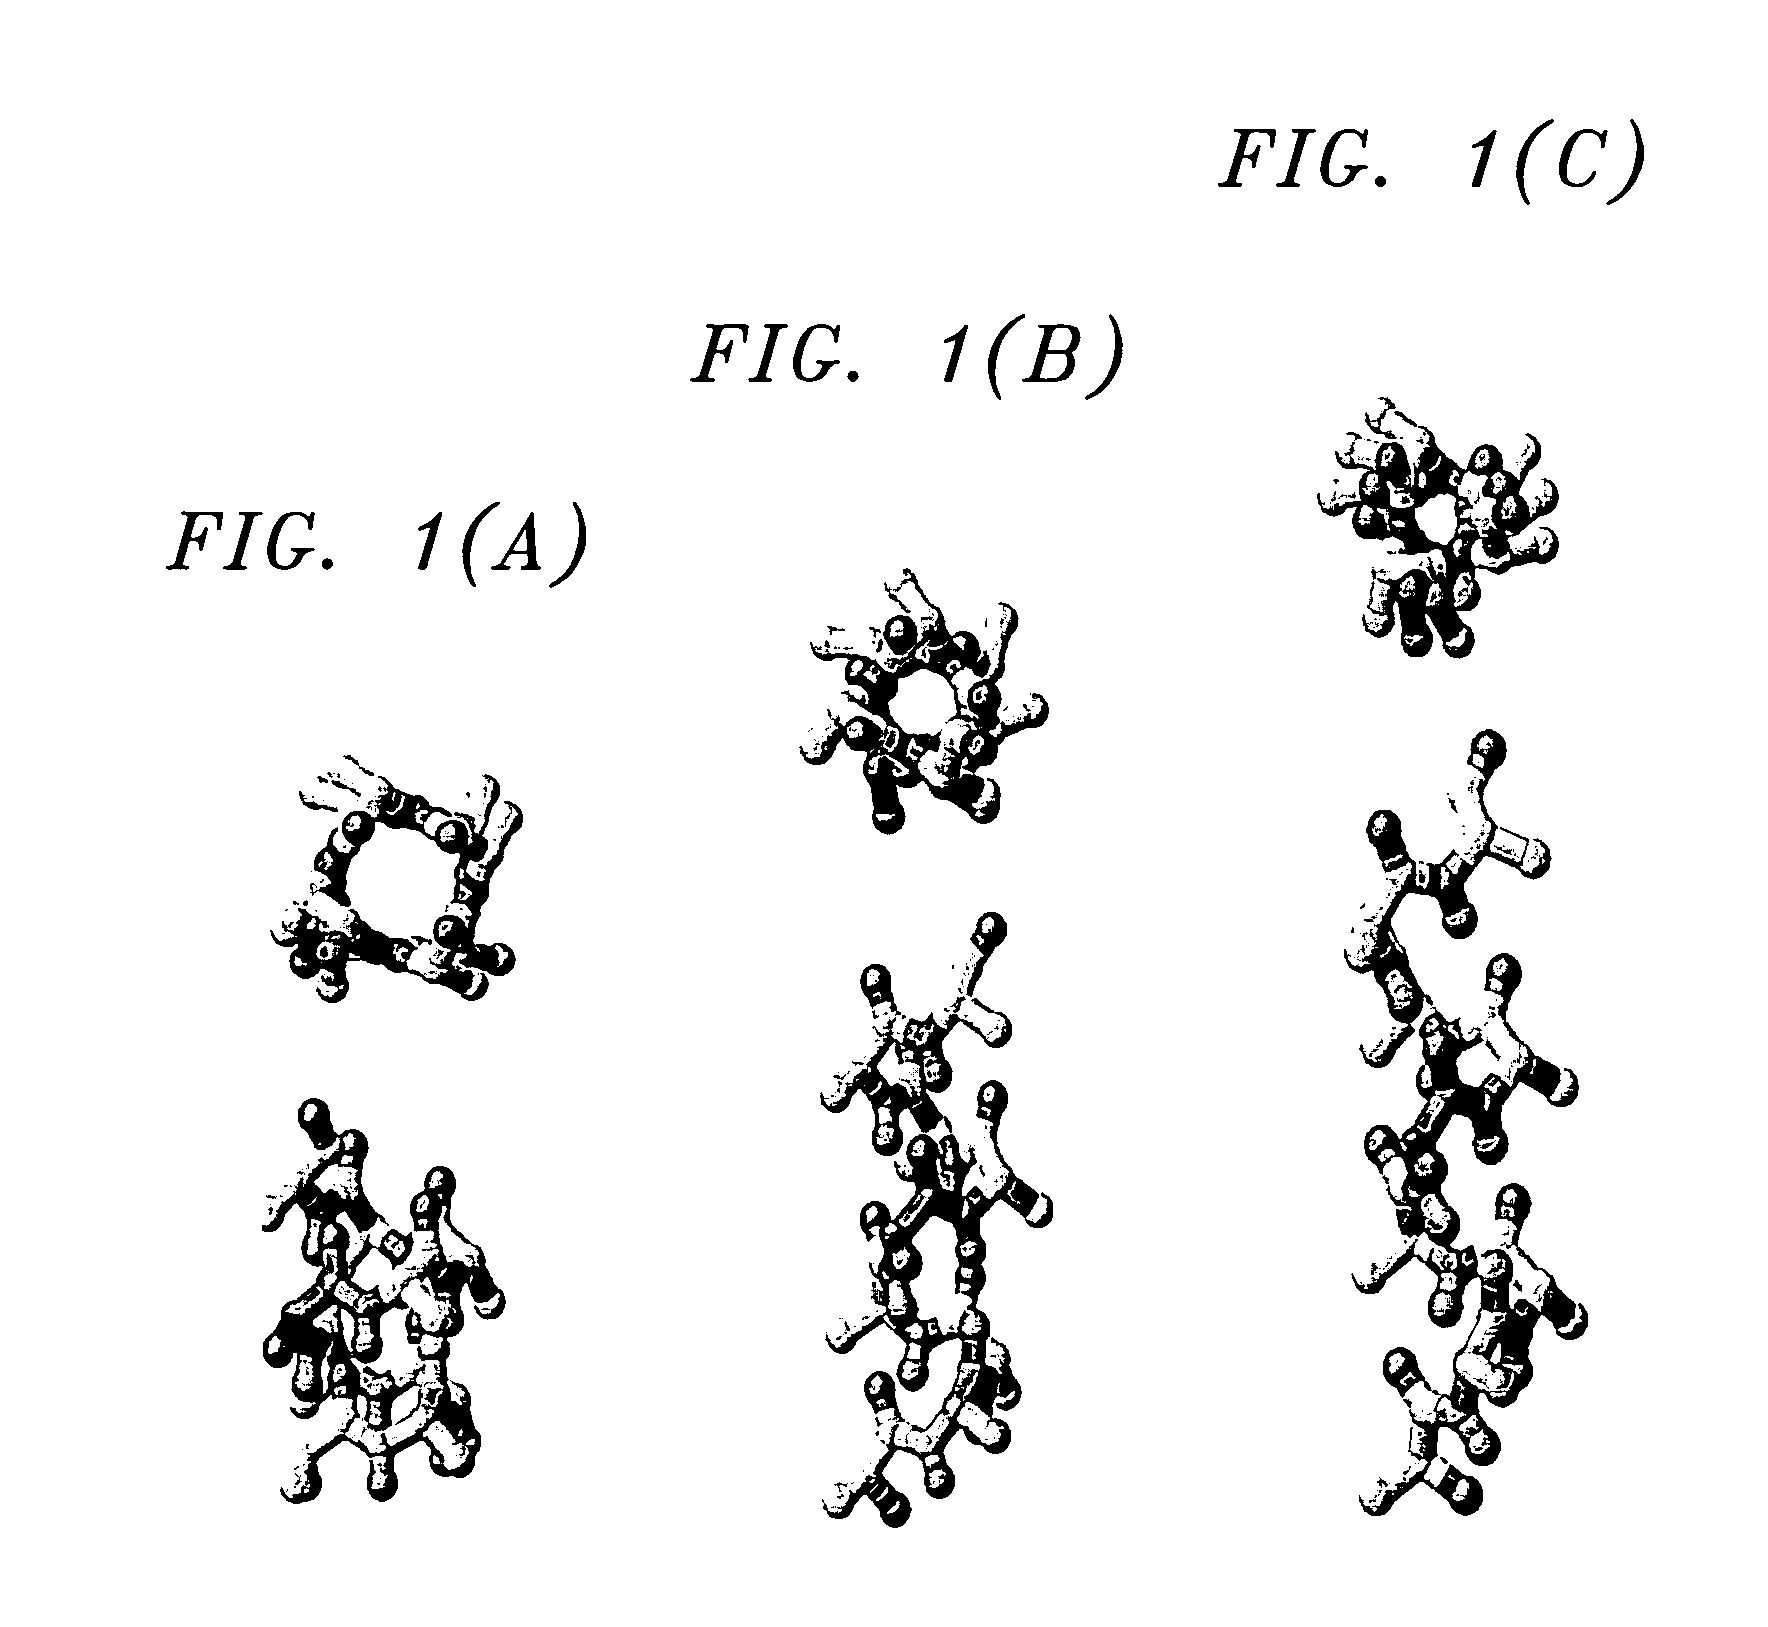 Sequence pattern descriptors for transmembrane structural details